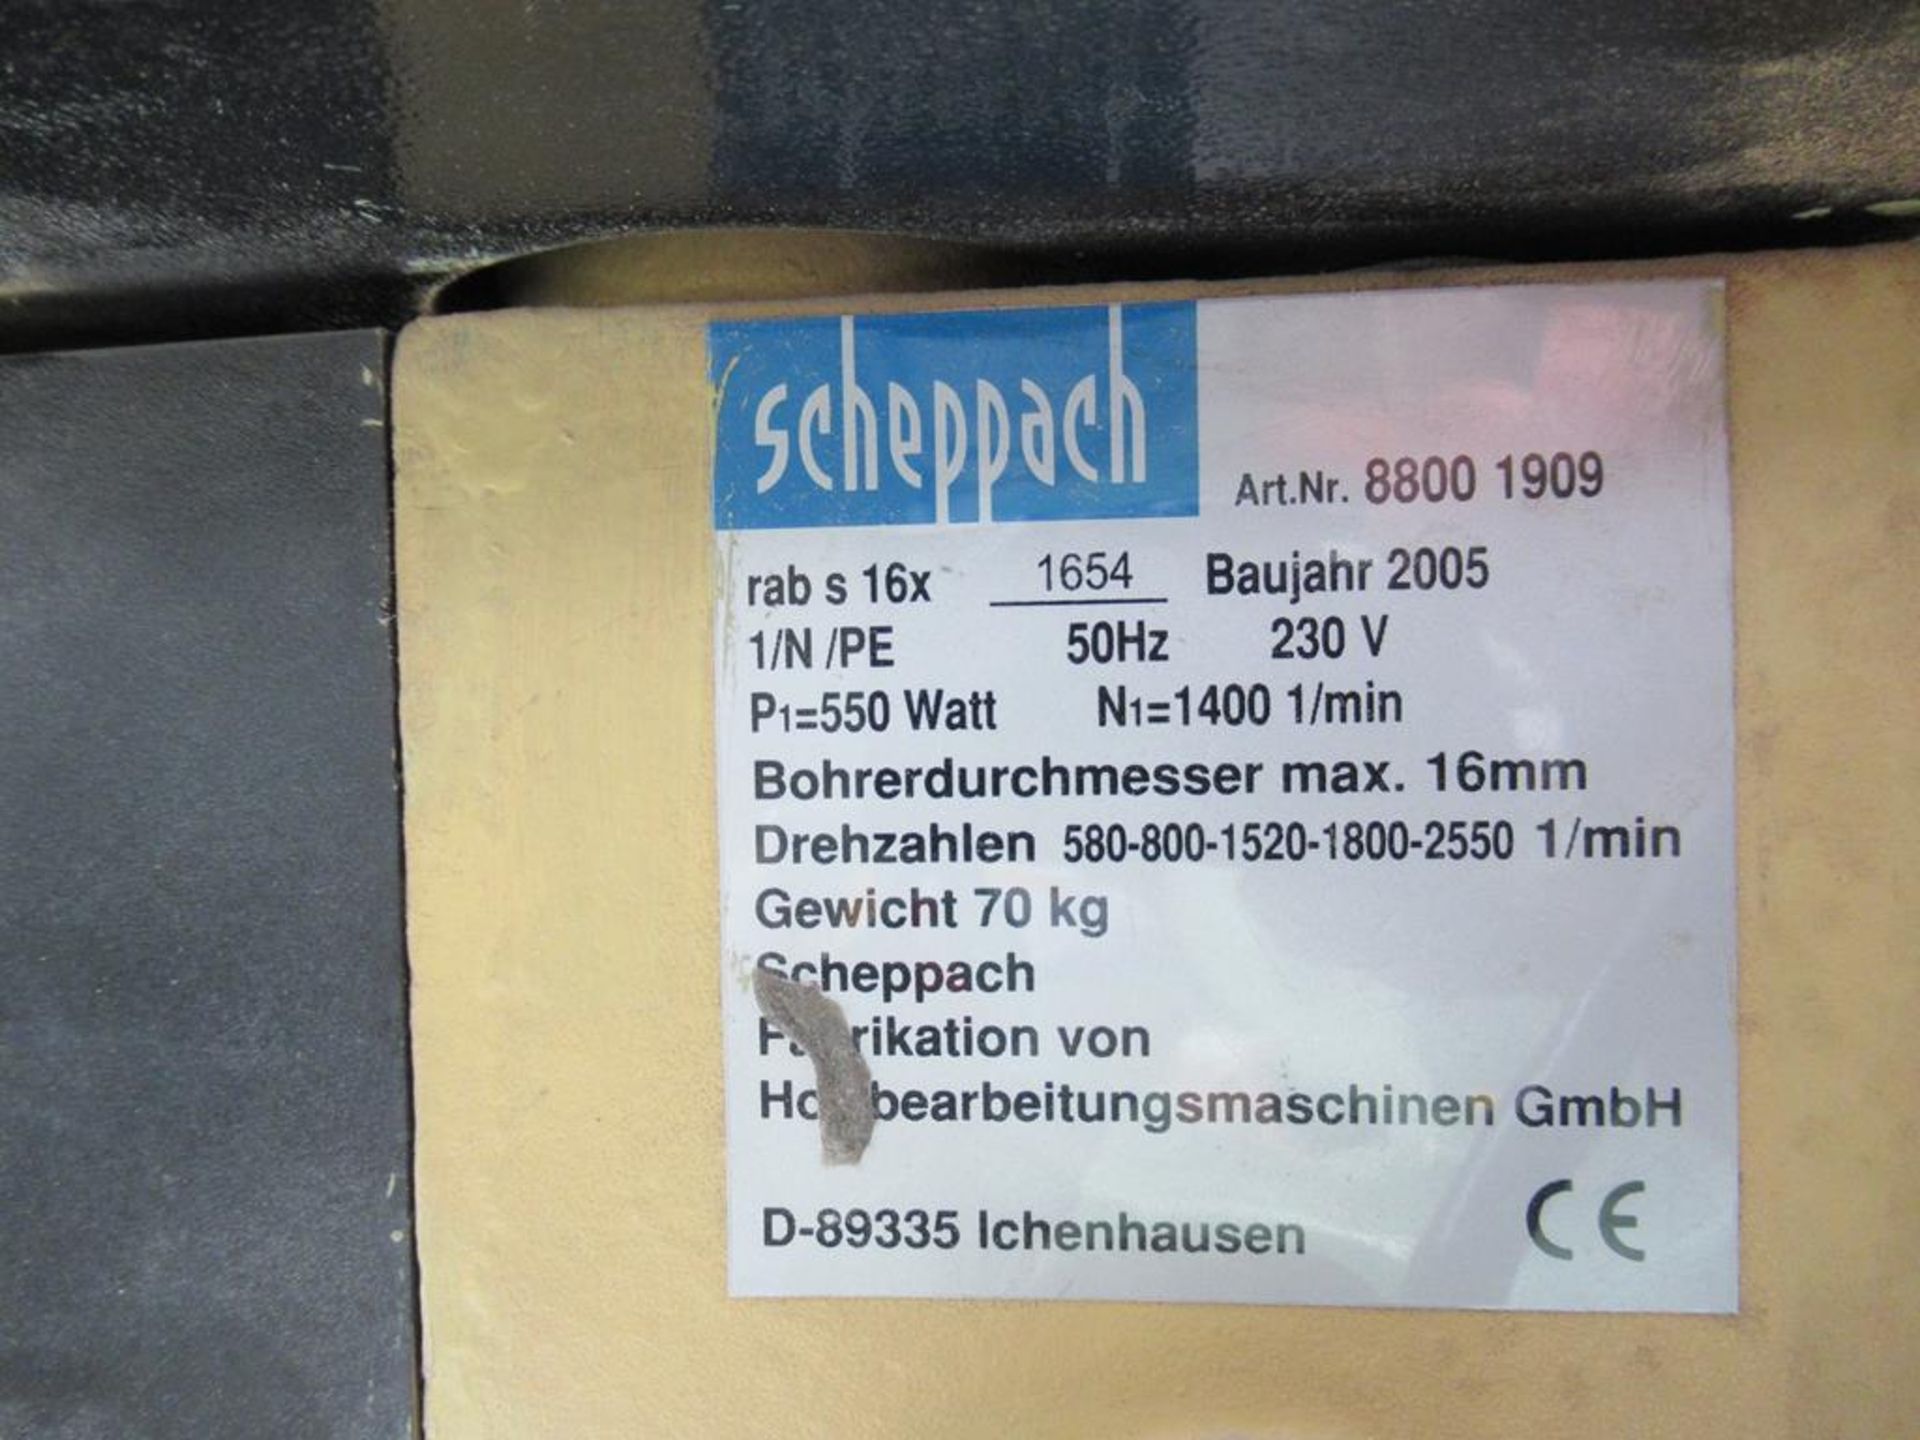 Scheppachi RAB S16X Radial Drill Press - Image 3 of 4